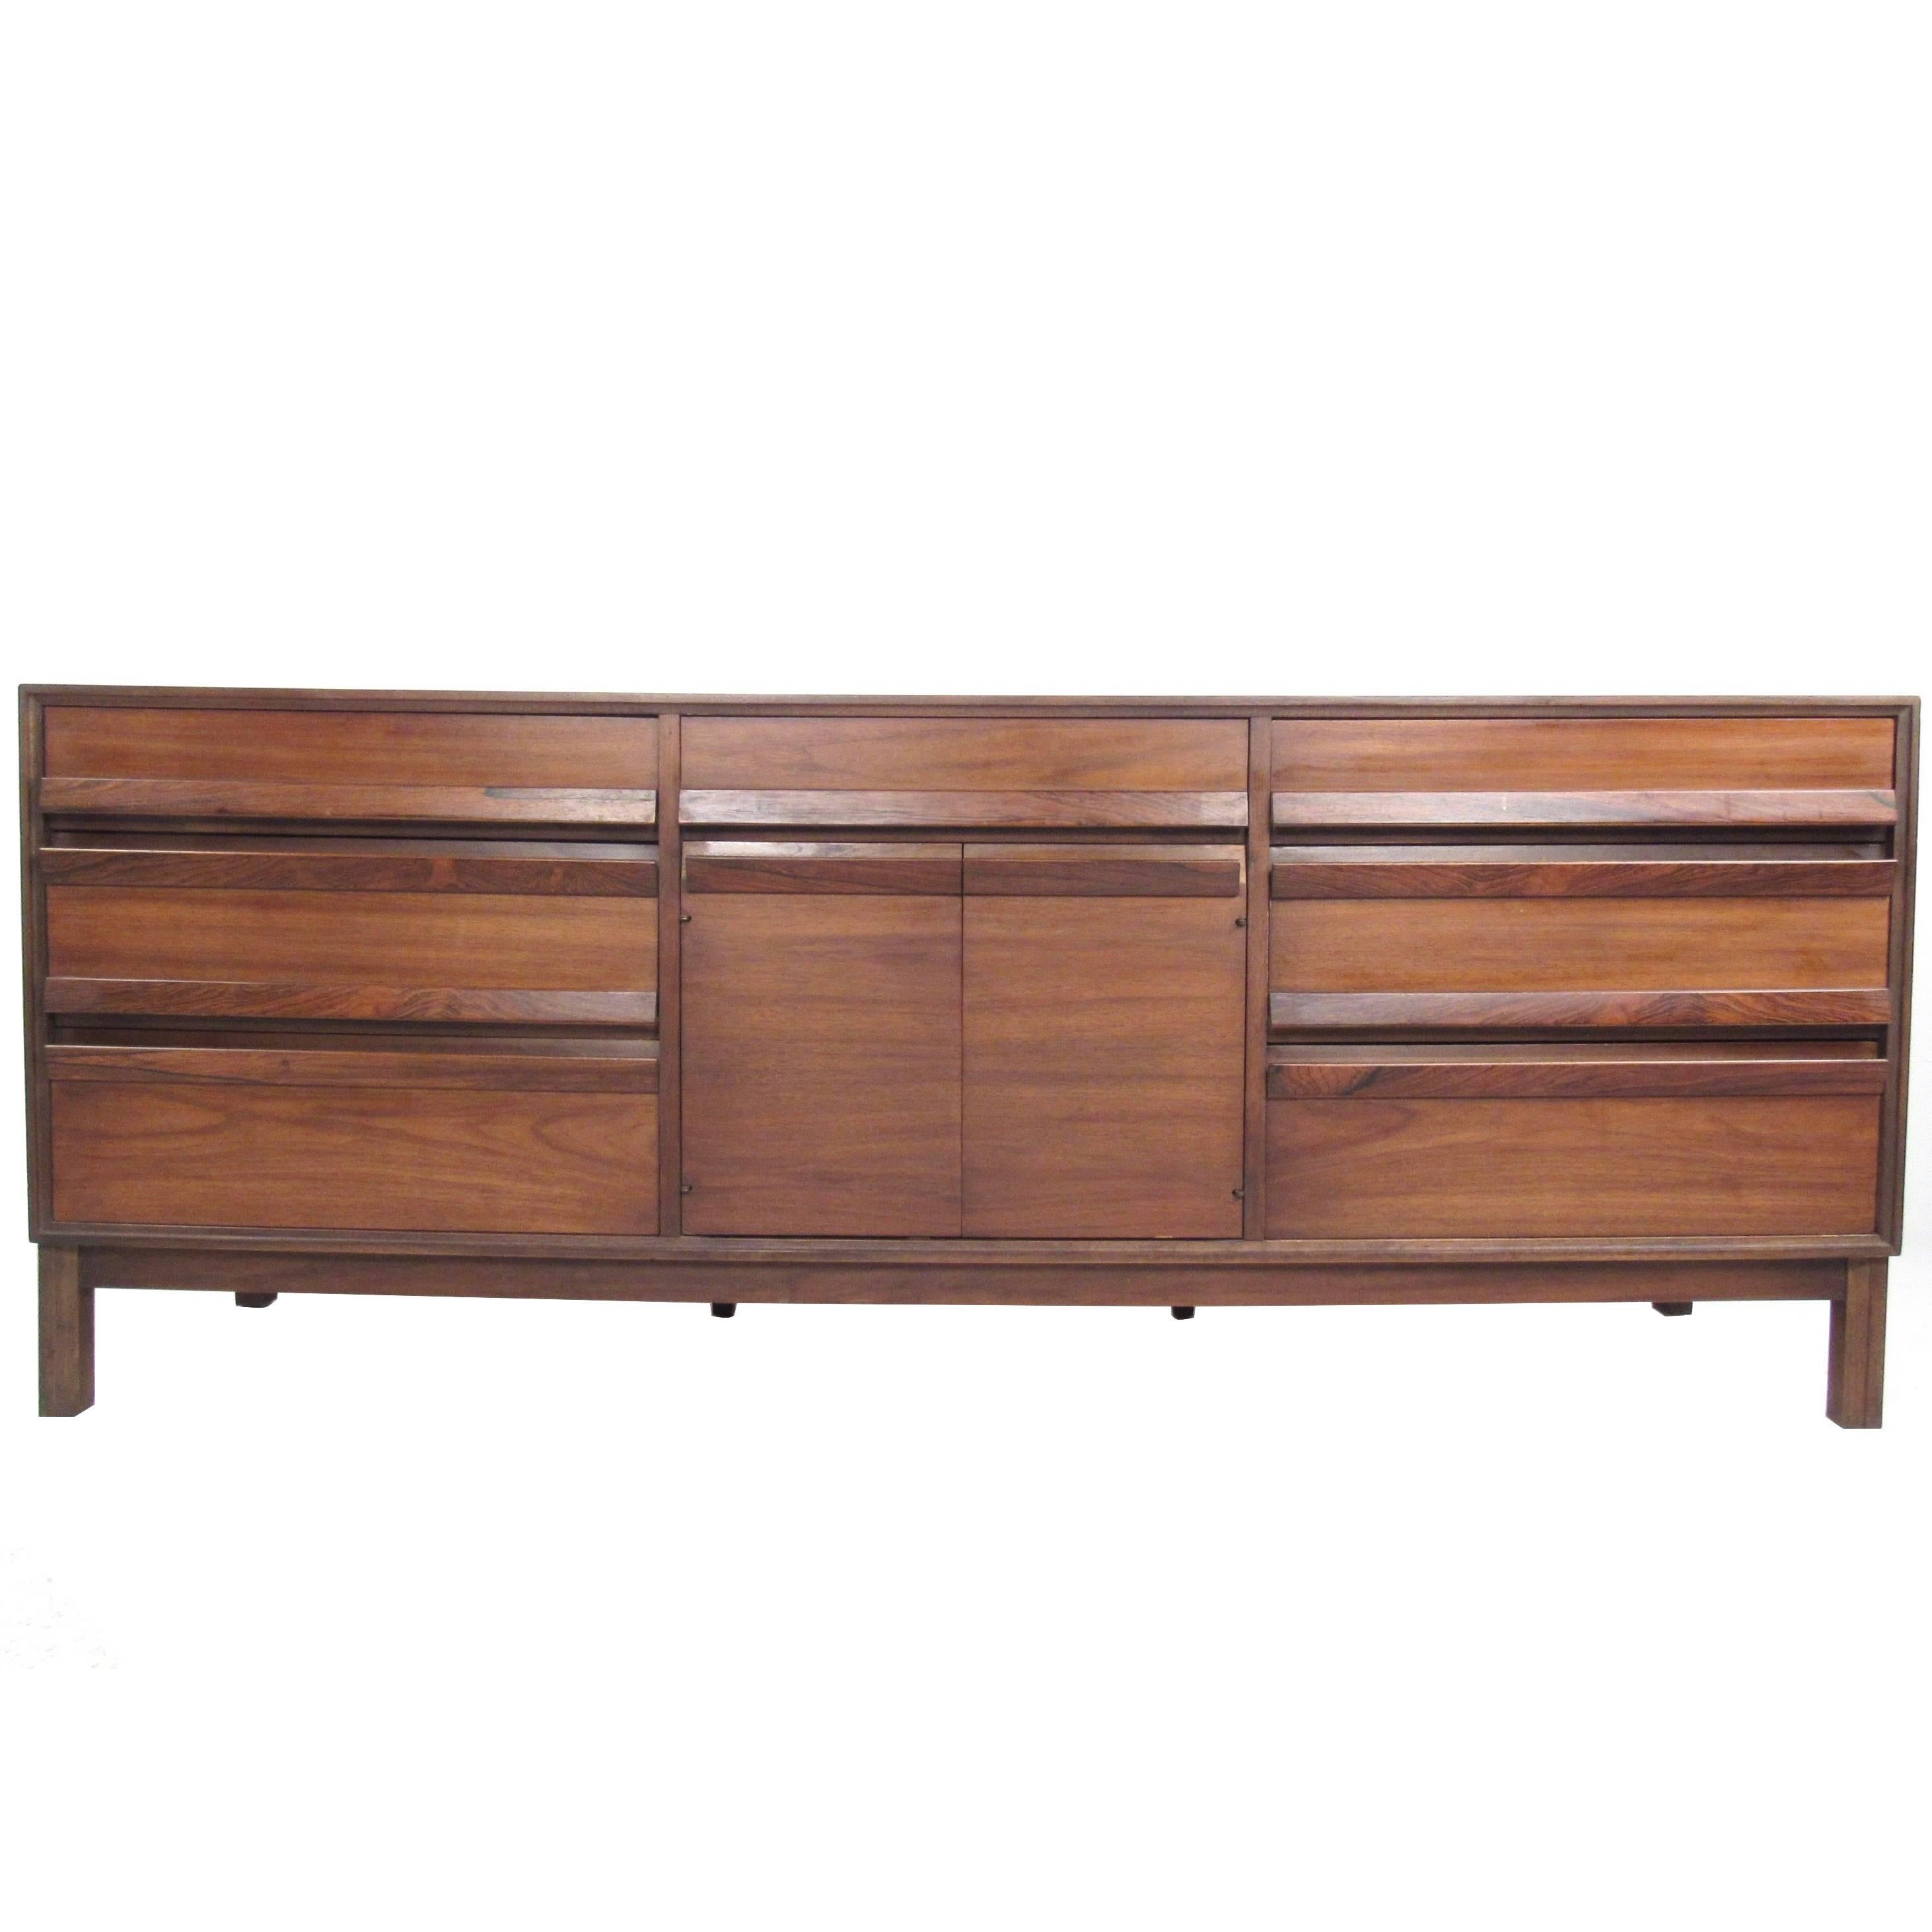 Stylish Mid-Century Modern Walnut and Rosewood Dresser